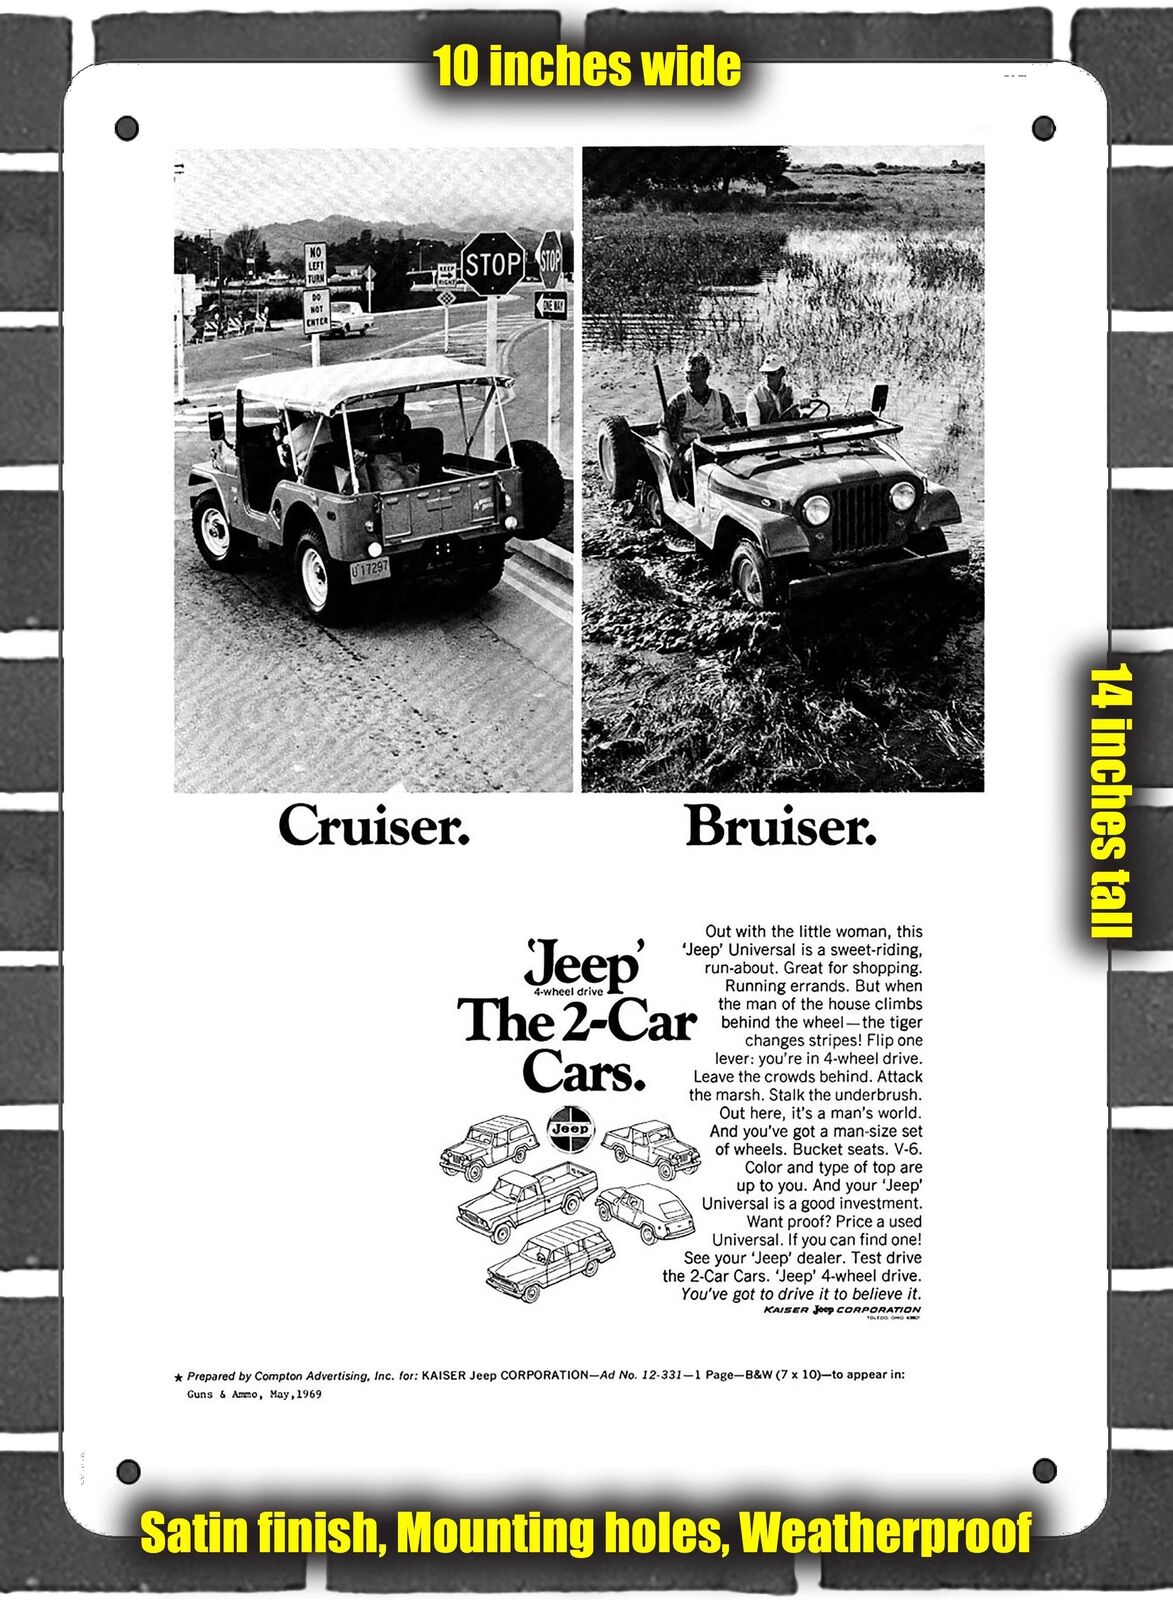 METAL SIGN - 1969 Jeep Vintage Ad 15